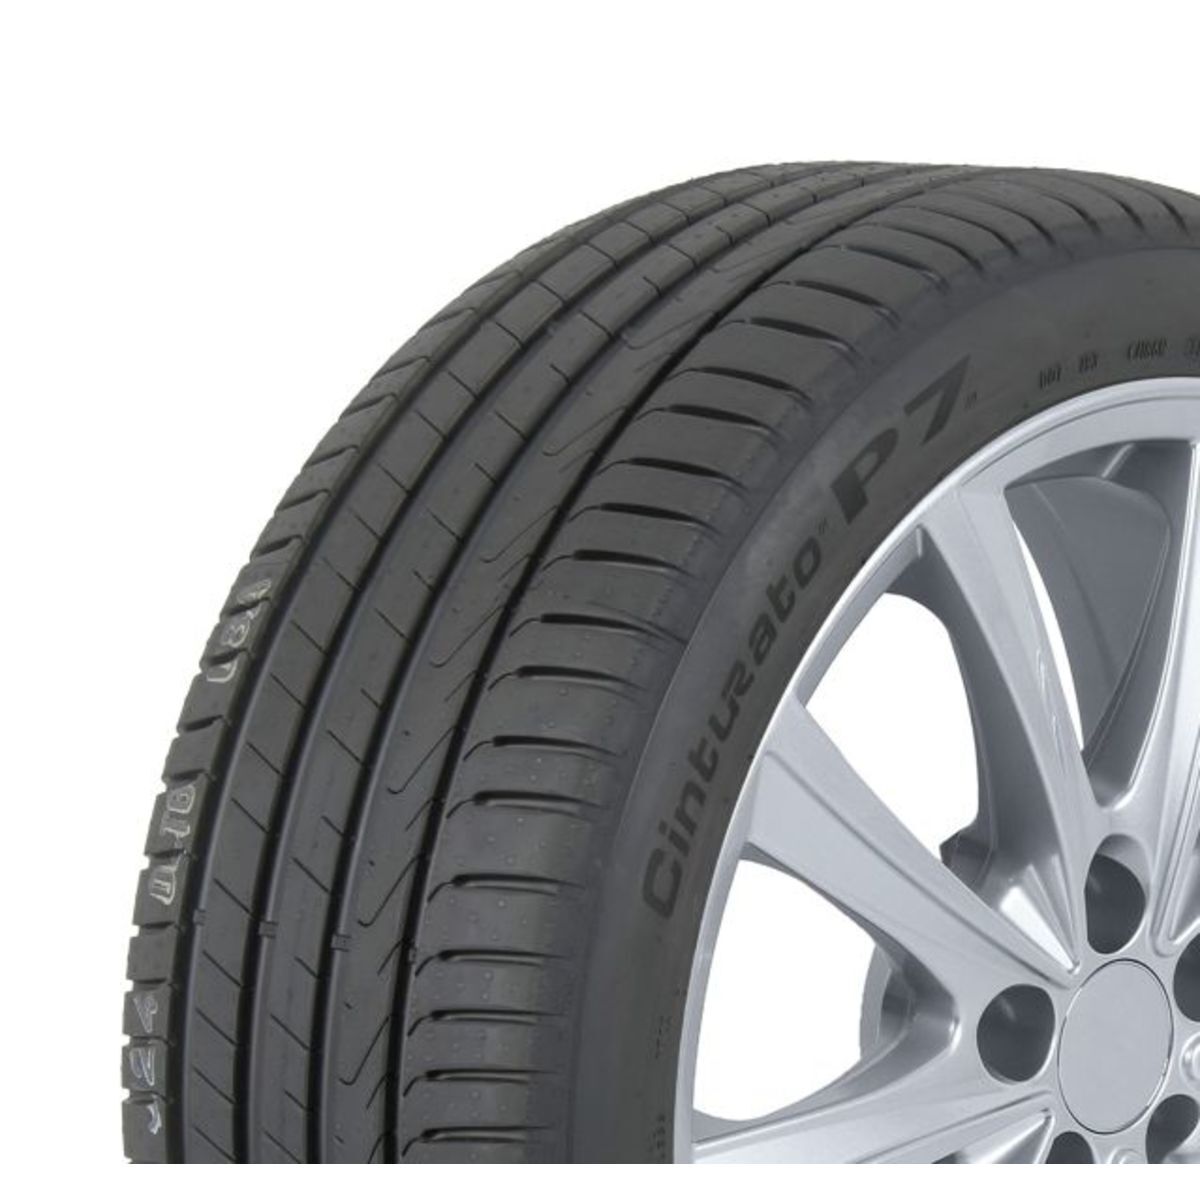 Neumáticos de verano PIRELLI Cinturato P7 225/45R17 91W